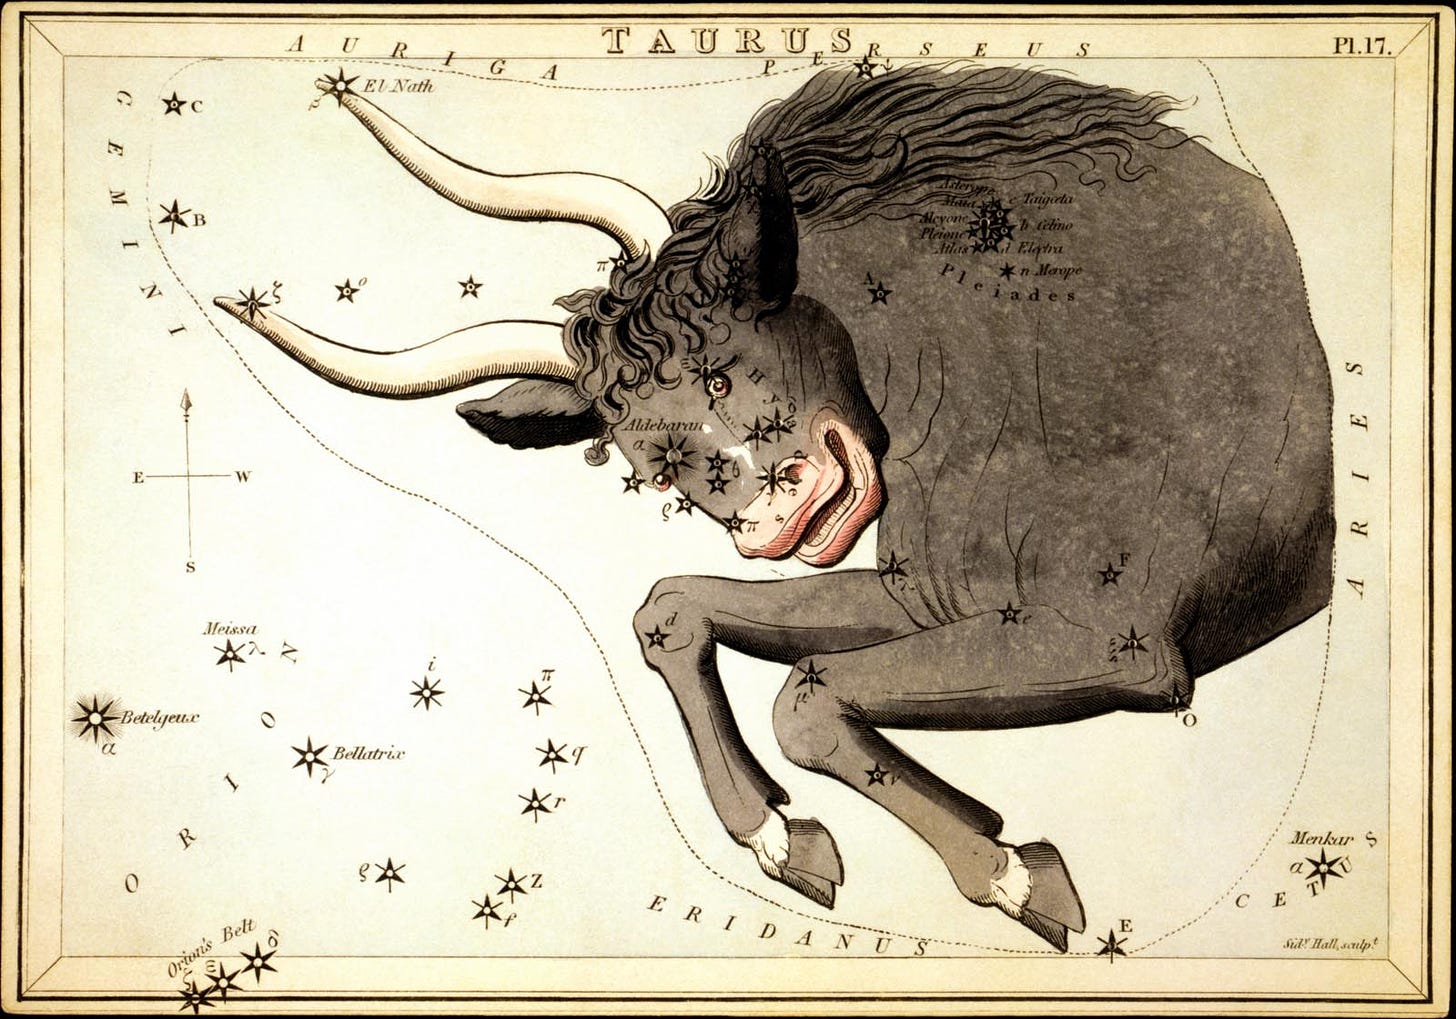 Meet Taurus the Bull in the evening sky